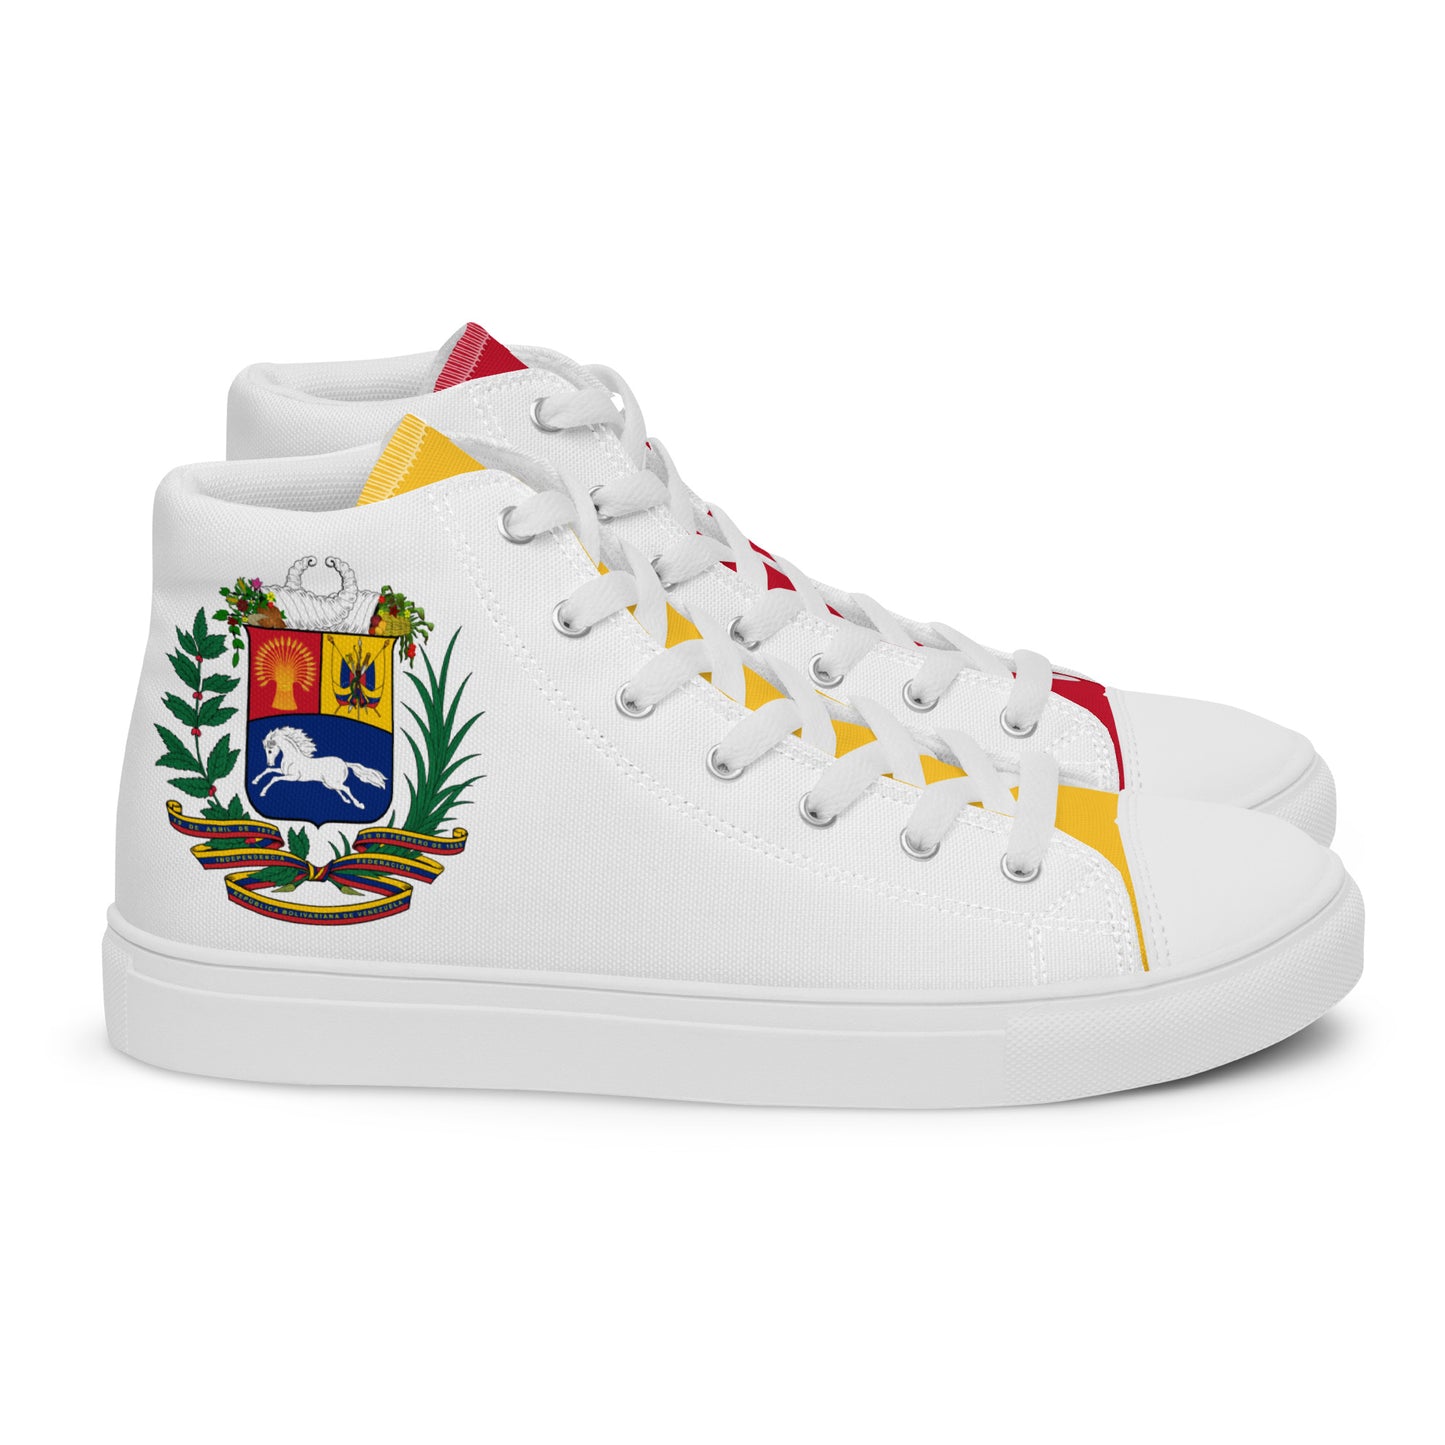 Venezuela - Men - White - High top shoes